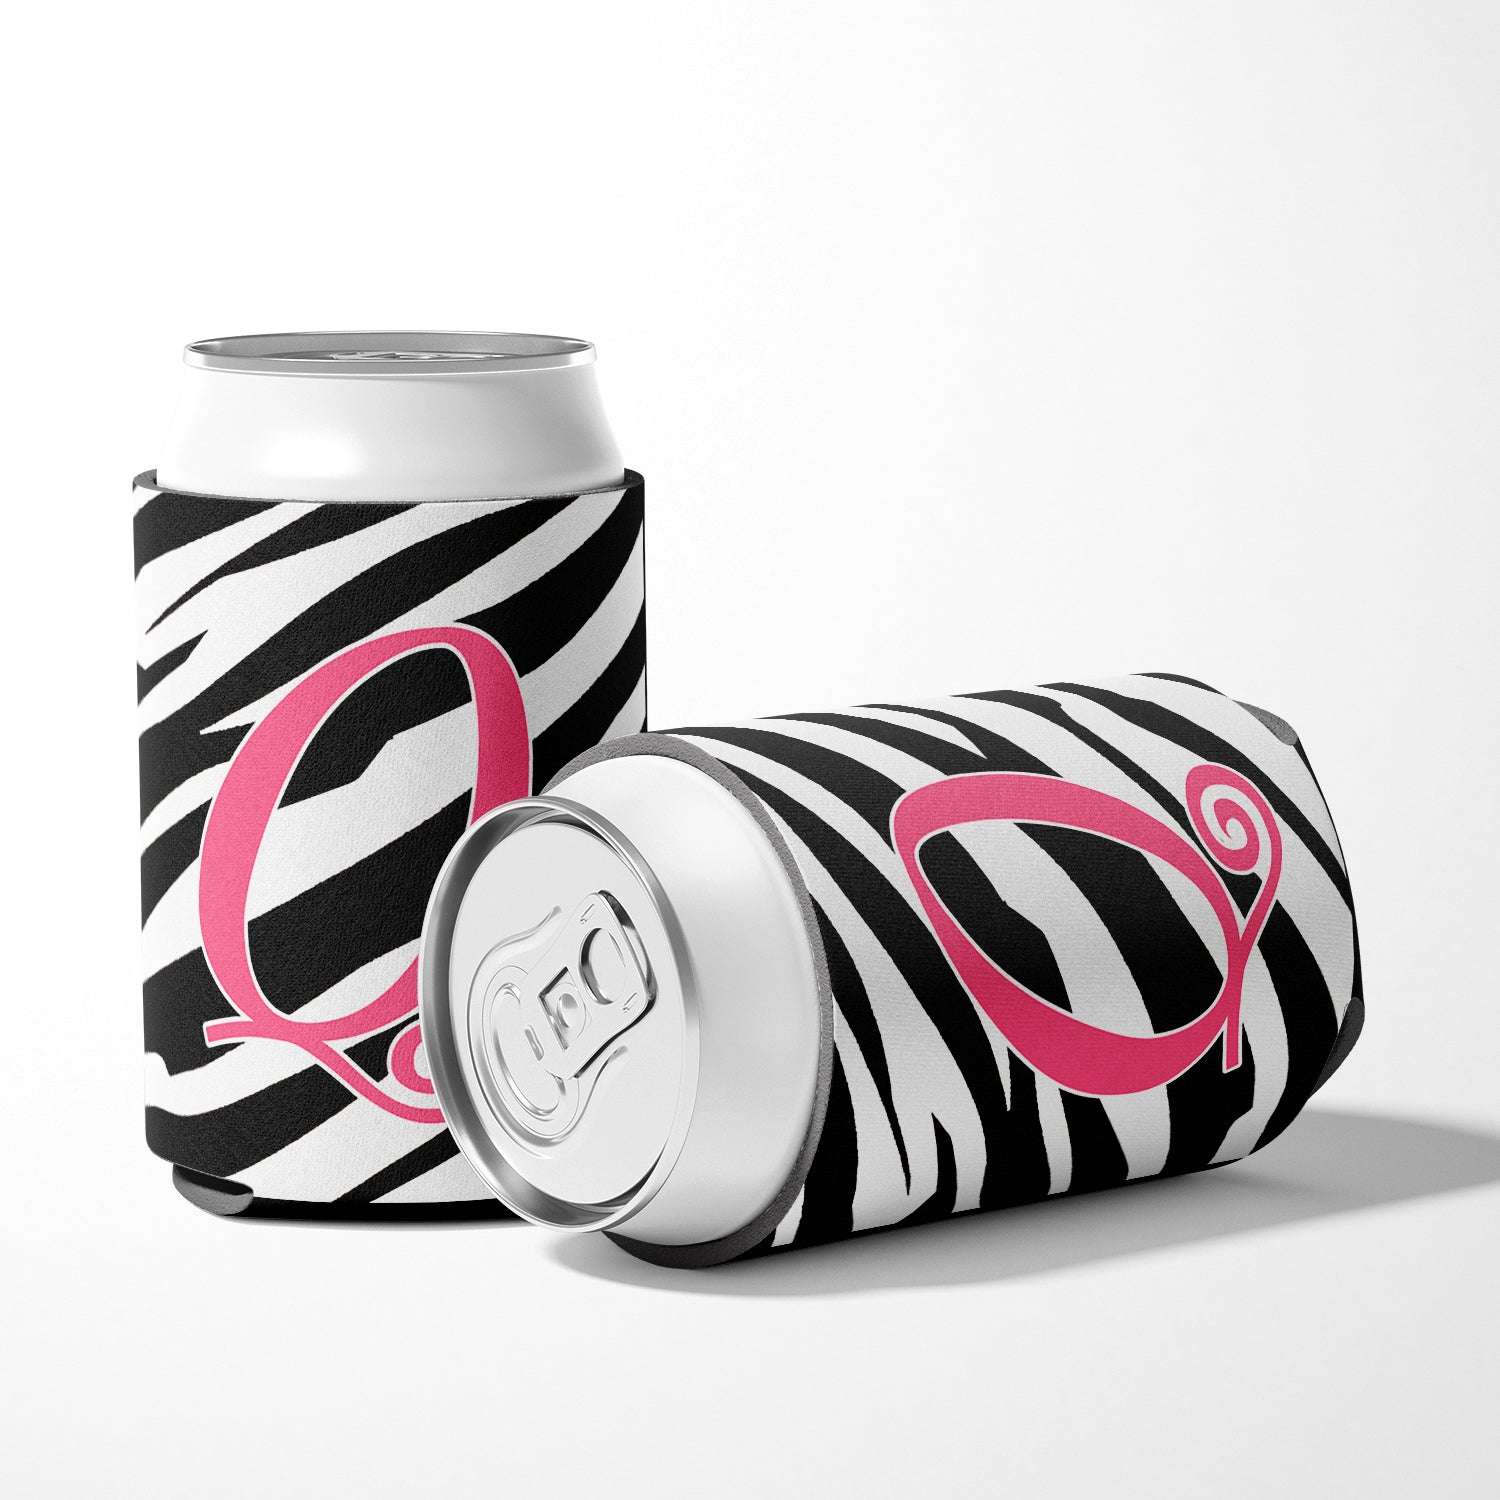 Letter Q Initial Monogram - Zebra Stripe and Pink Can or Bottle Beverage Insulator Hugger.